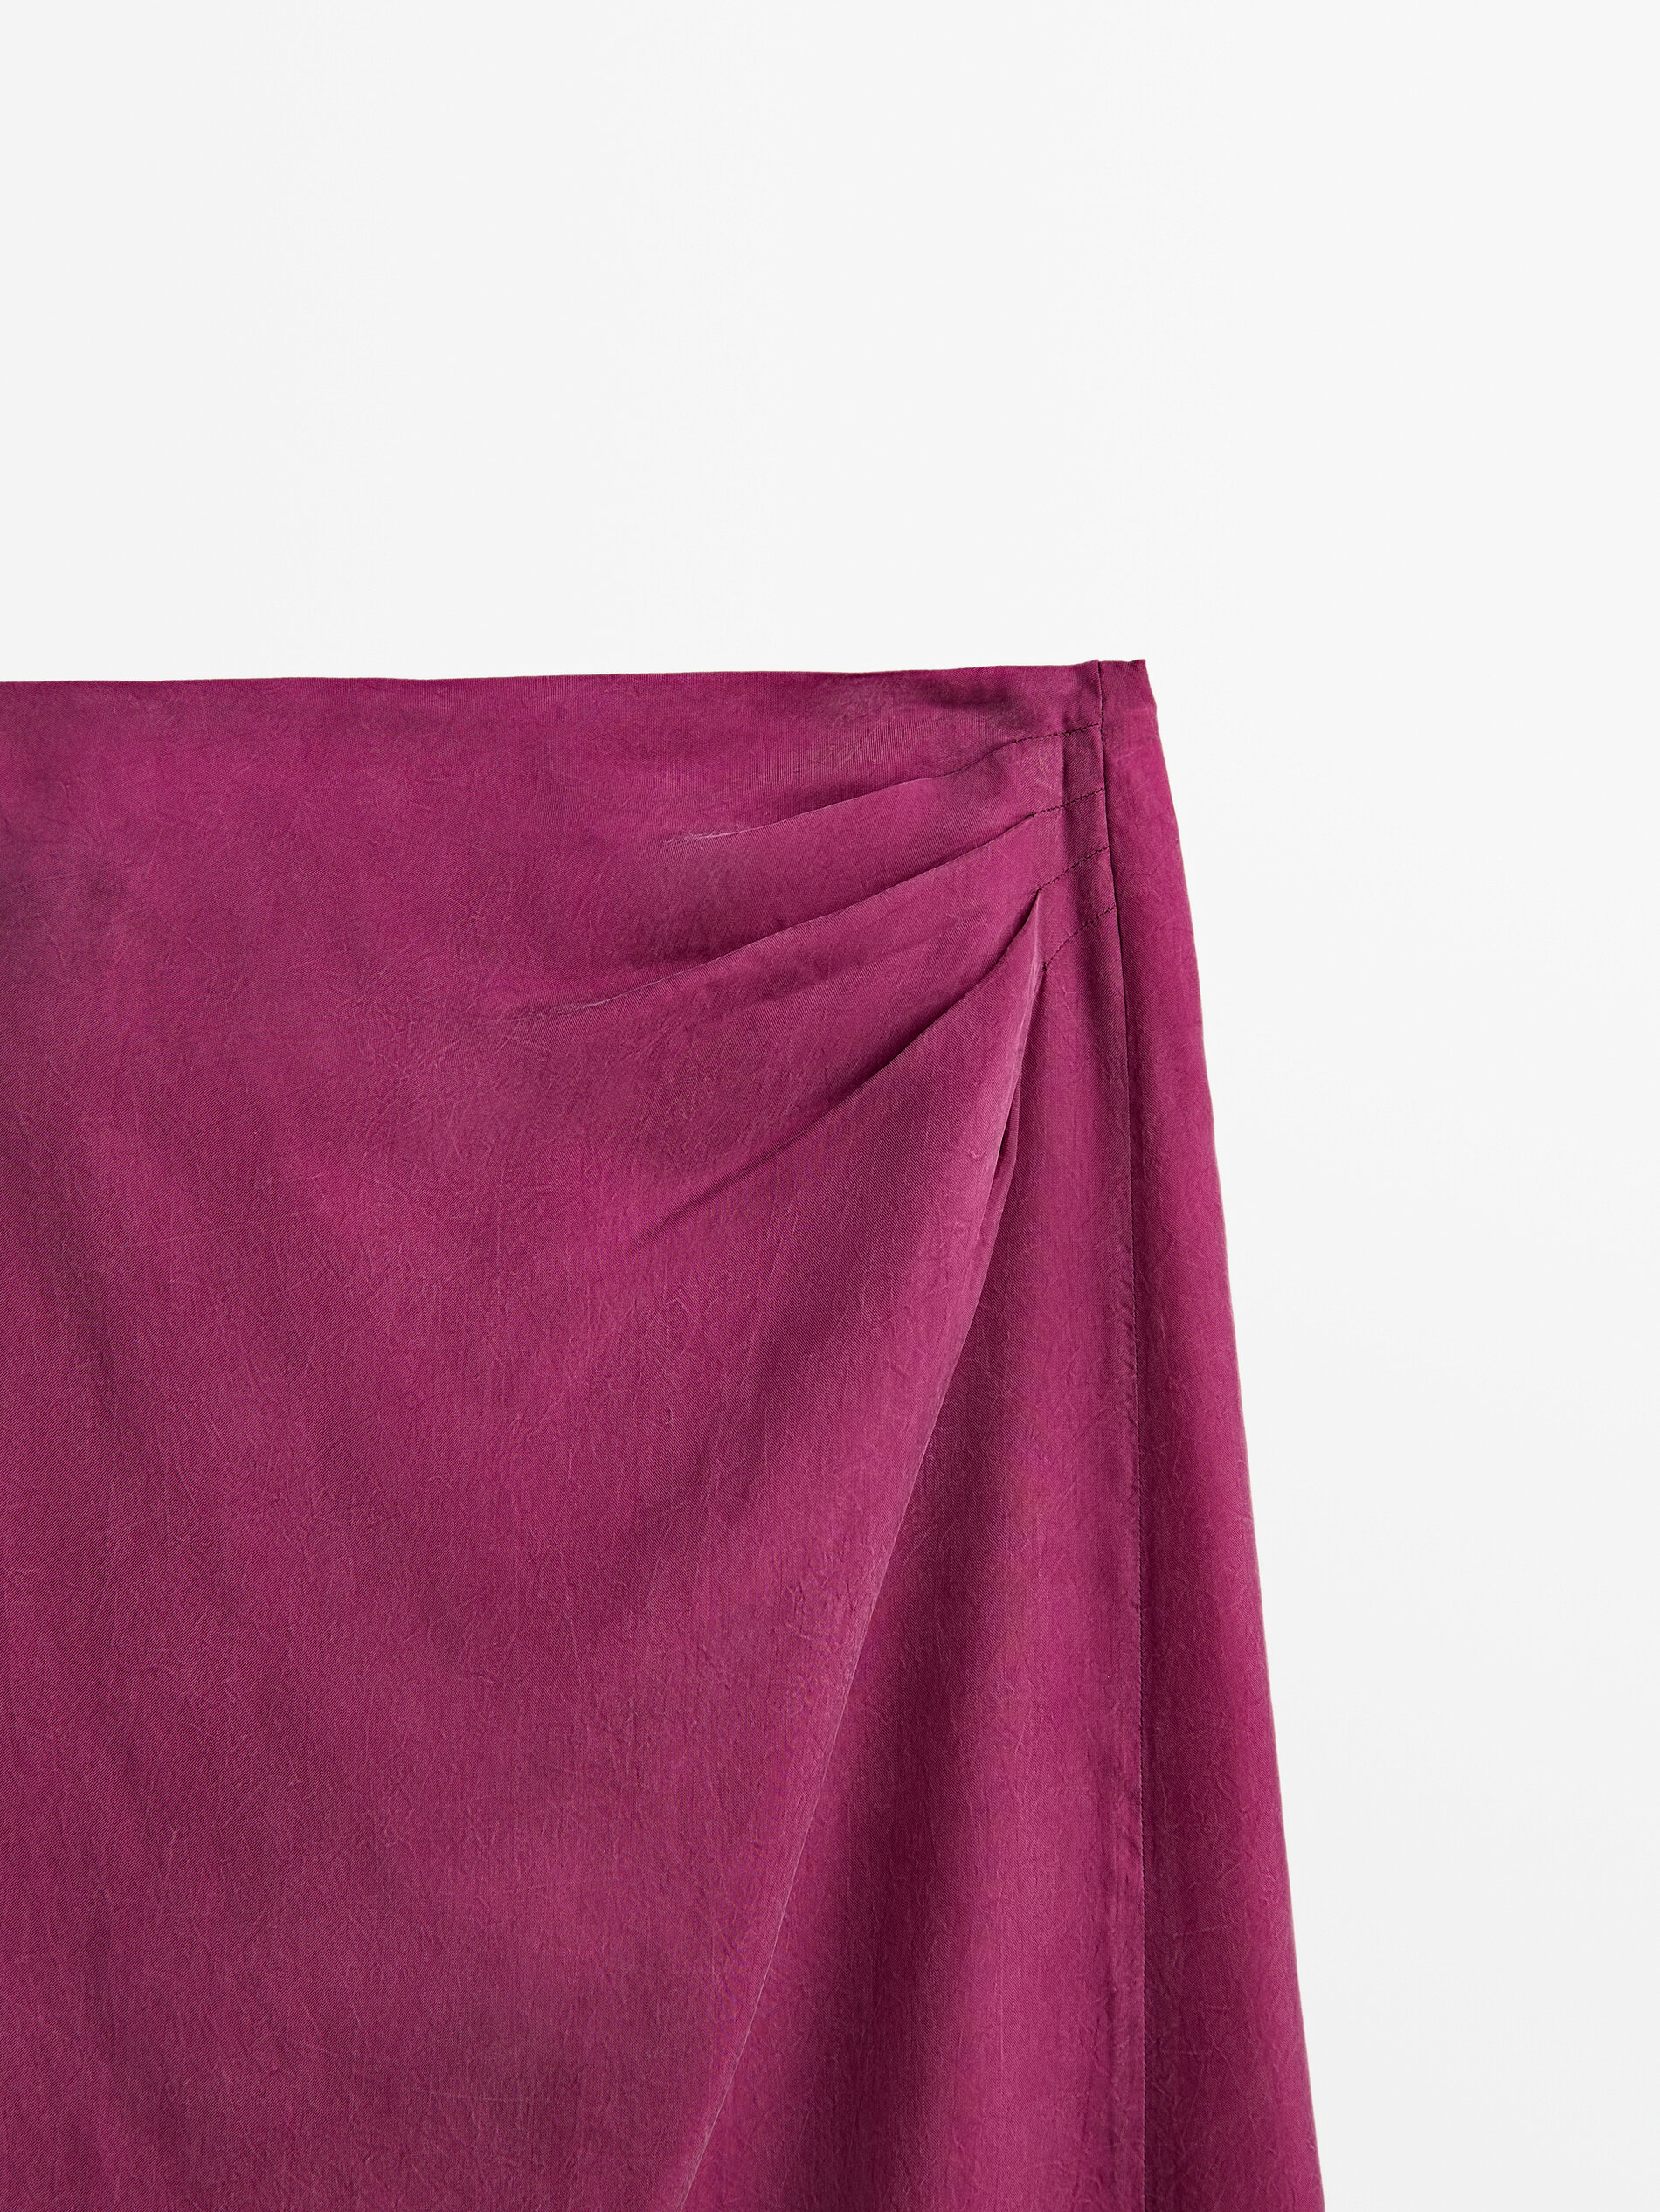 Draped cupro skirt